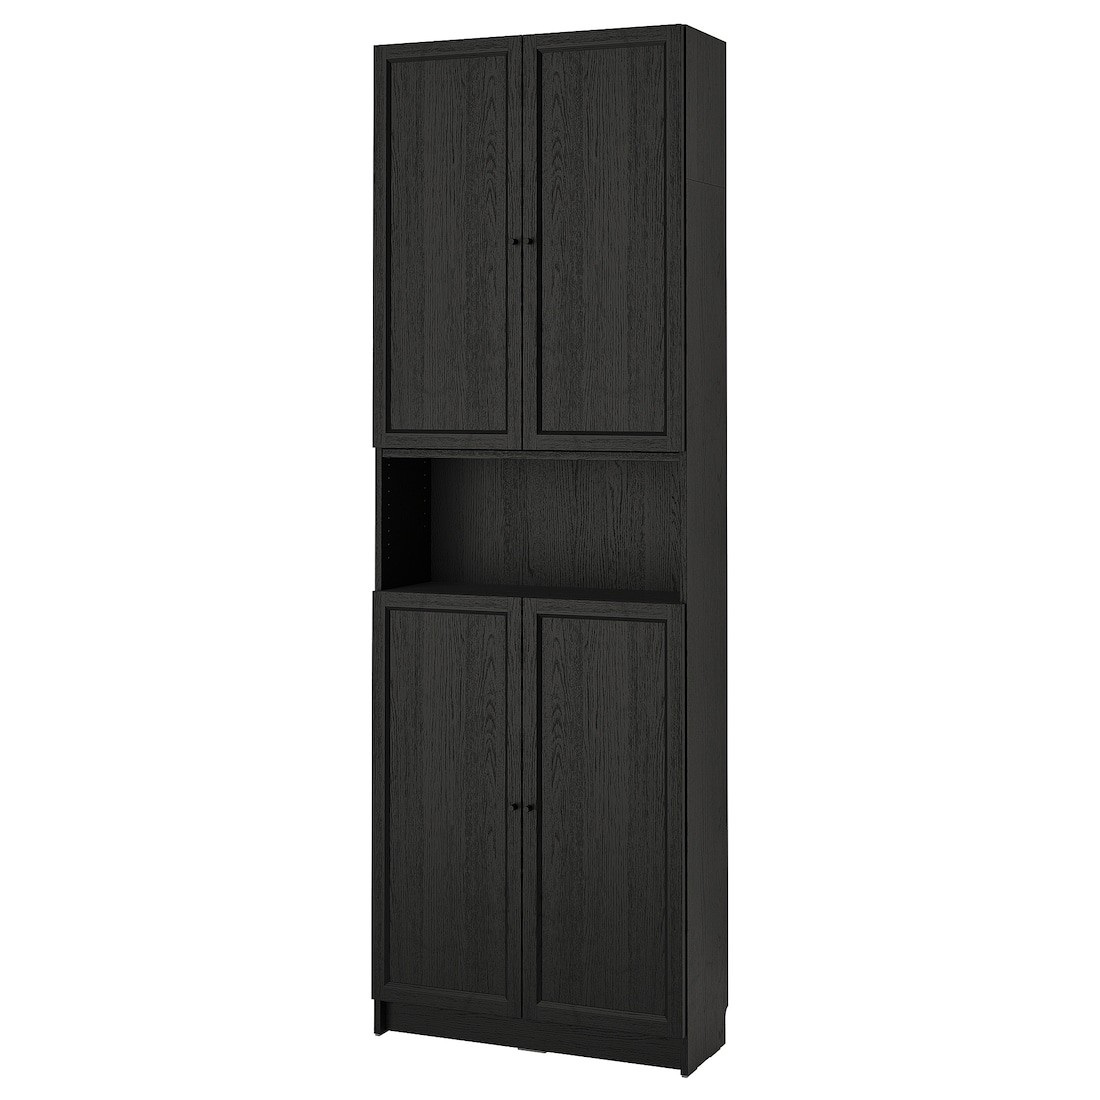 IKEA BILLY / OXBERG Стеллаж с дверями / надставкой, черная имитация дуб, 80x30x237 см 49483370 494.833.70